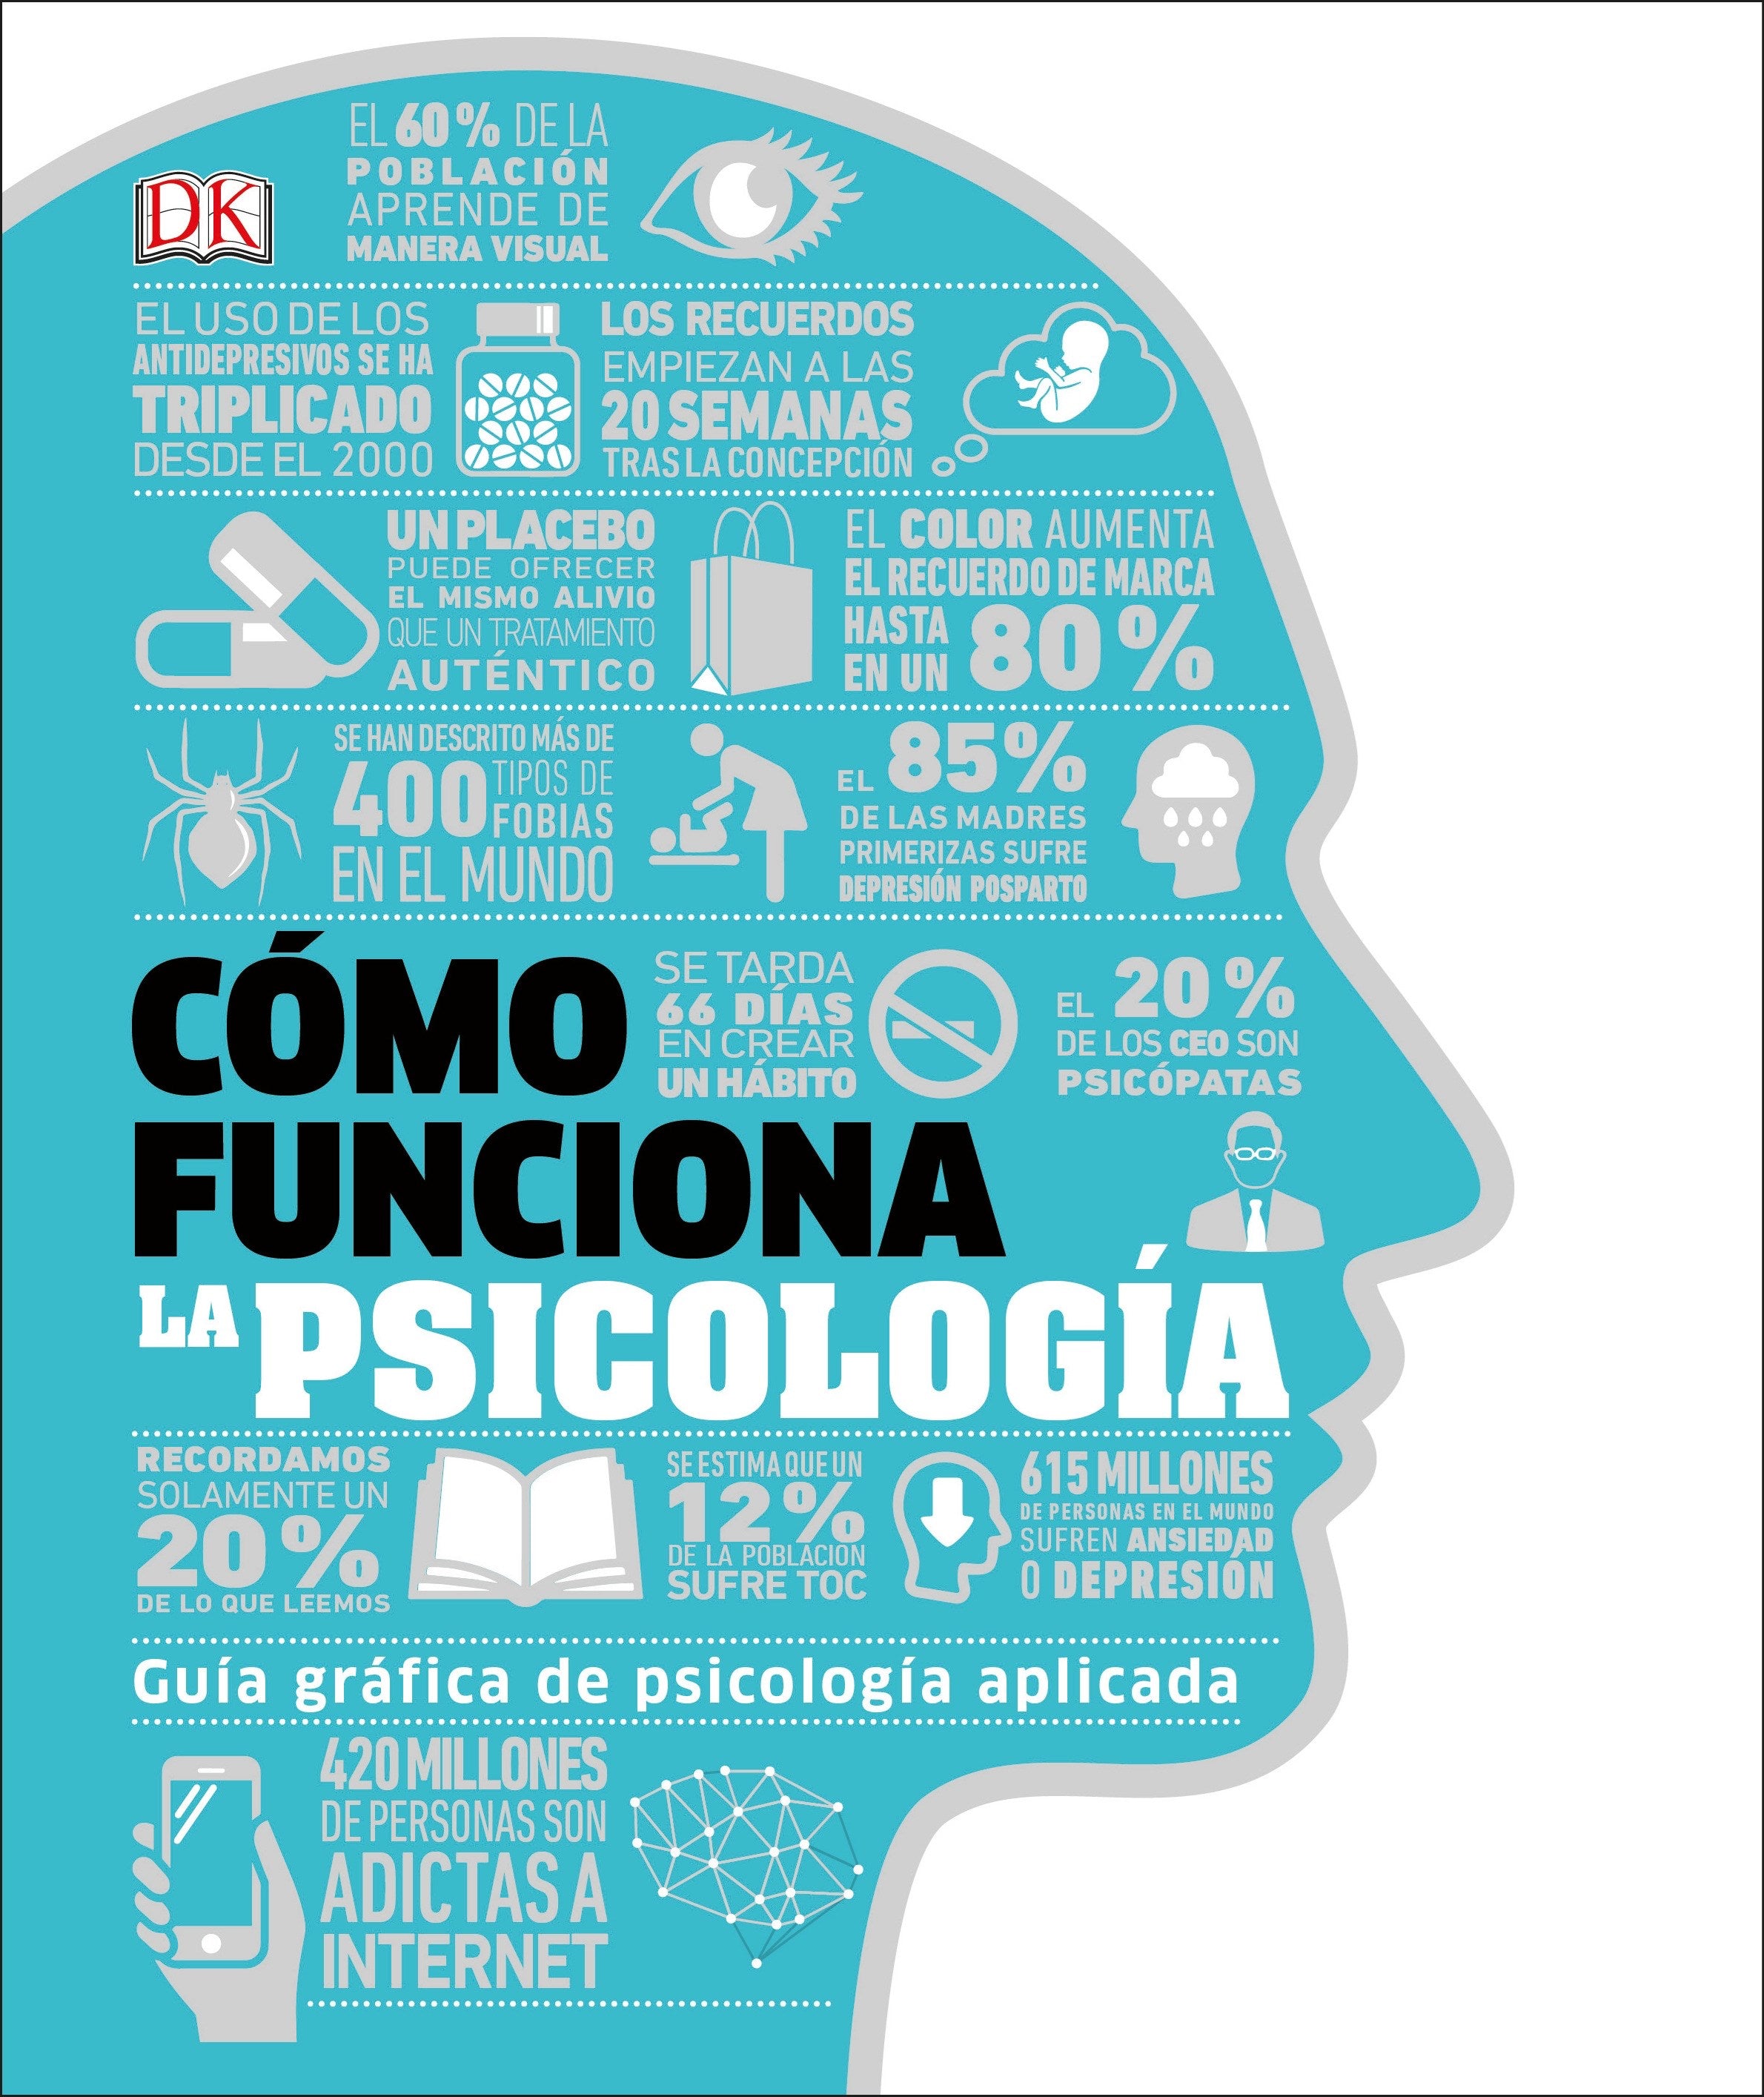 Cómo funciona la psicología (How Psychology Works): The Facts Visually Explained